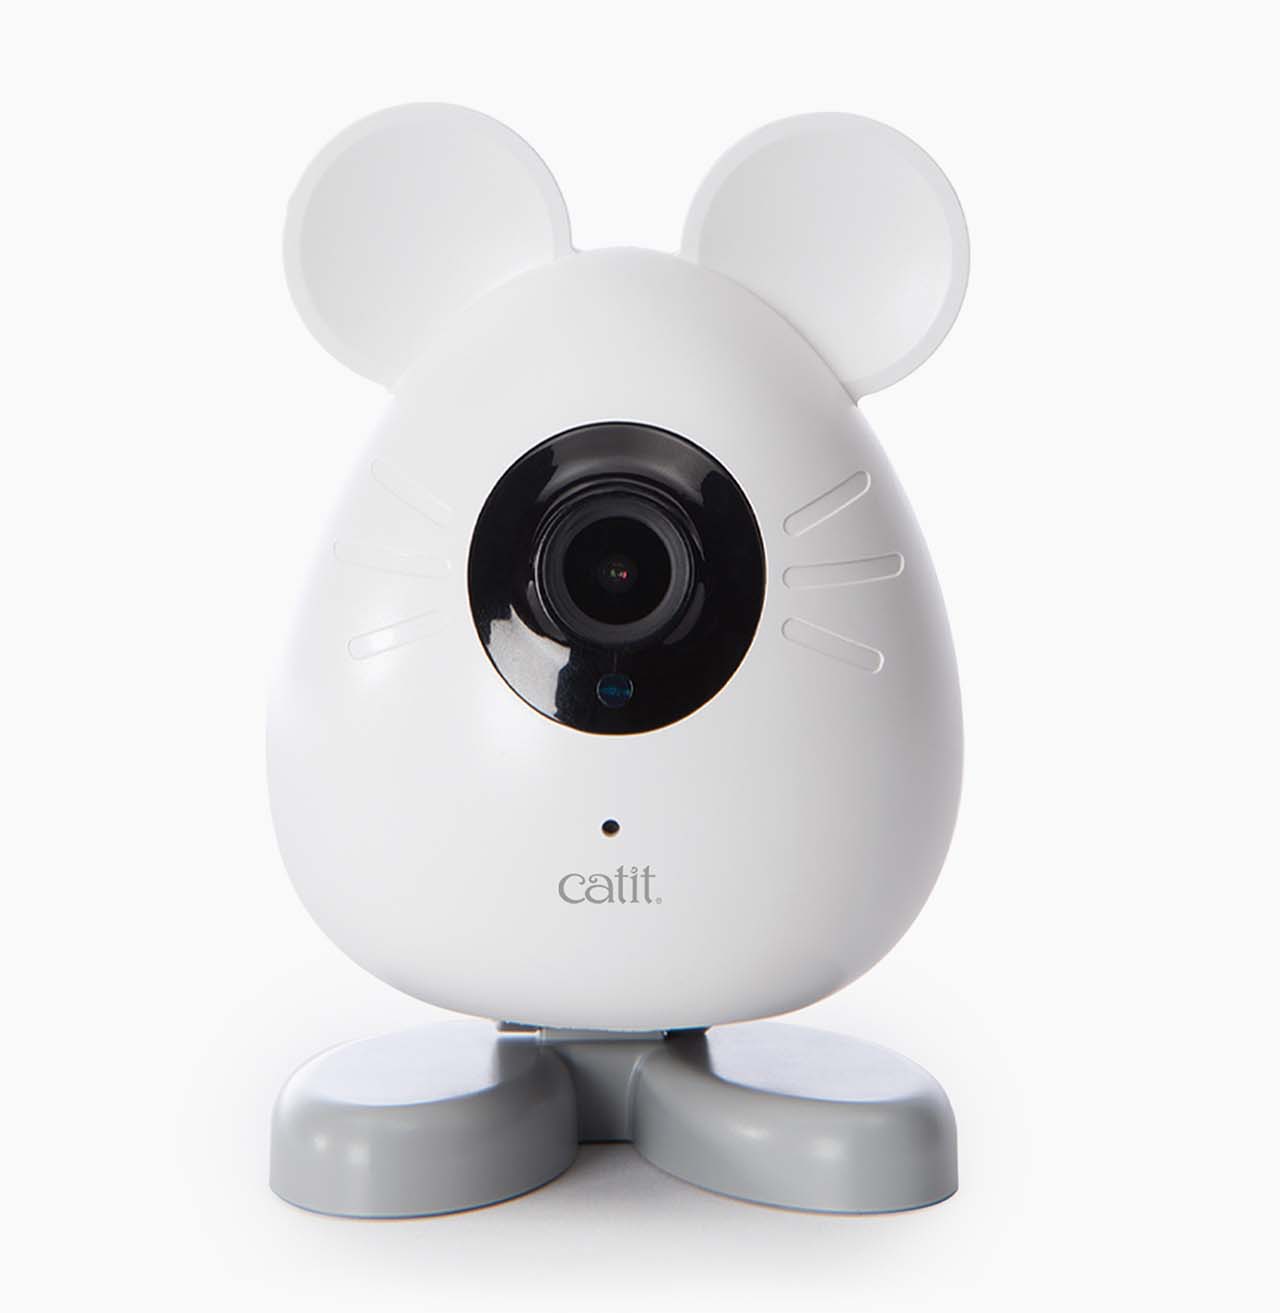 Catit PIXI Smart Mouse Camera